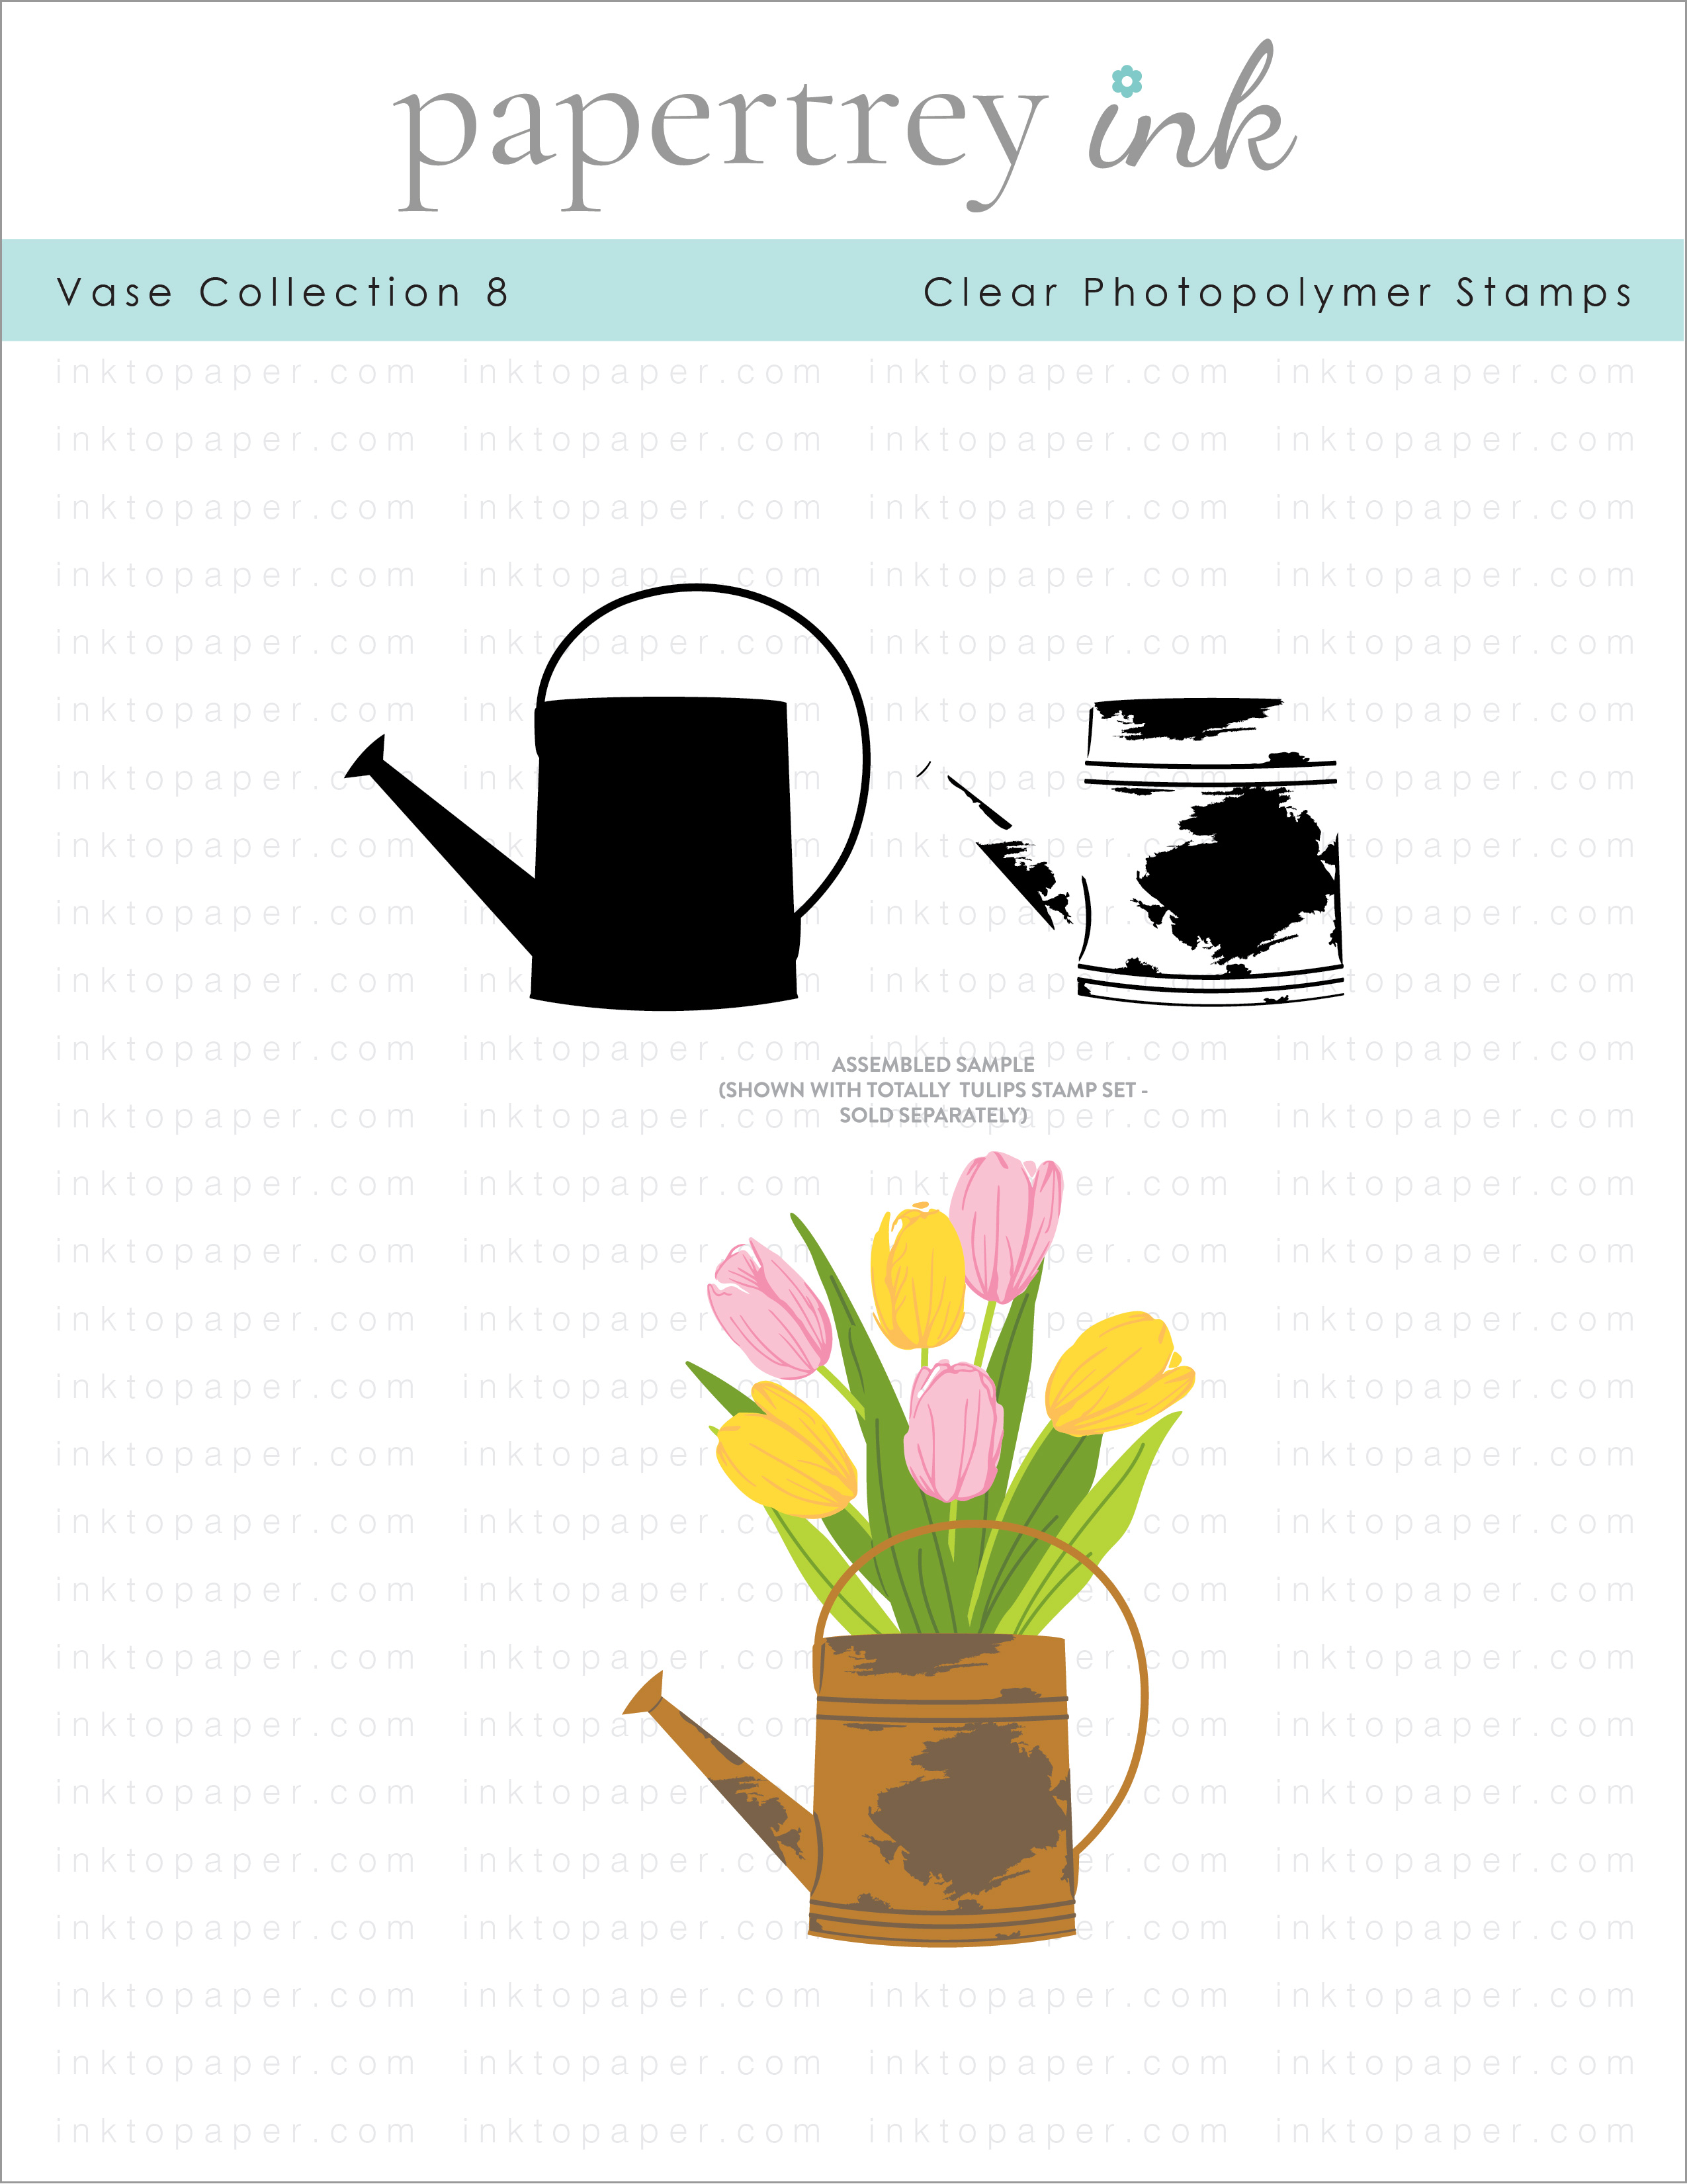 Vase Collection 8 Mini Stamp Set: Papertrey Ink